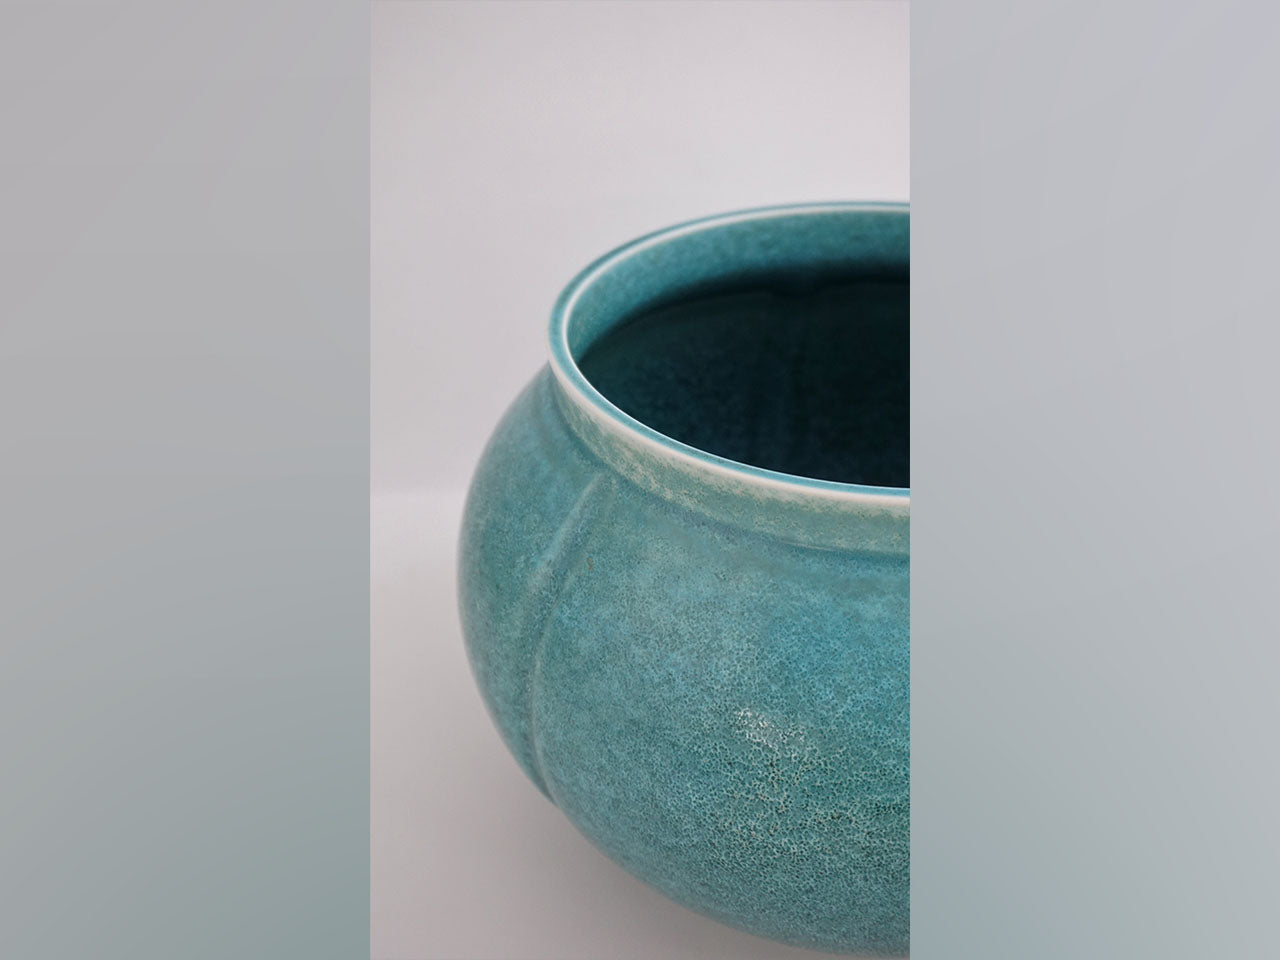 Flower vessel, Vase, Jun ware, Peach-split - Shinemon-kiln, Arita ware, Ceramics